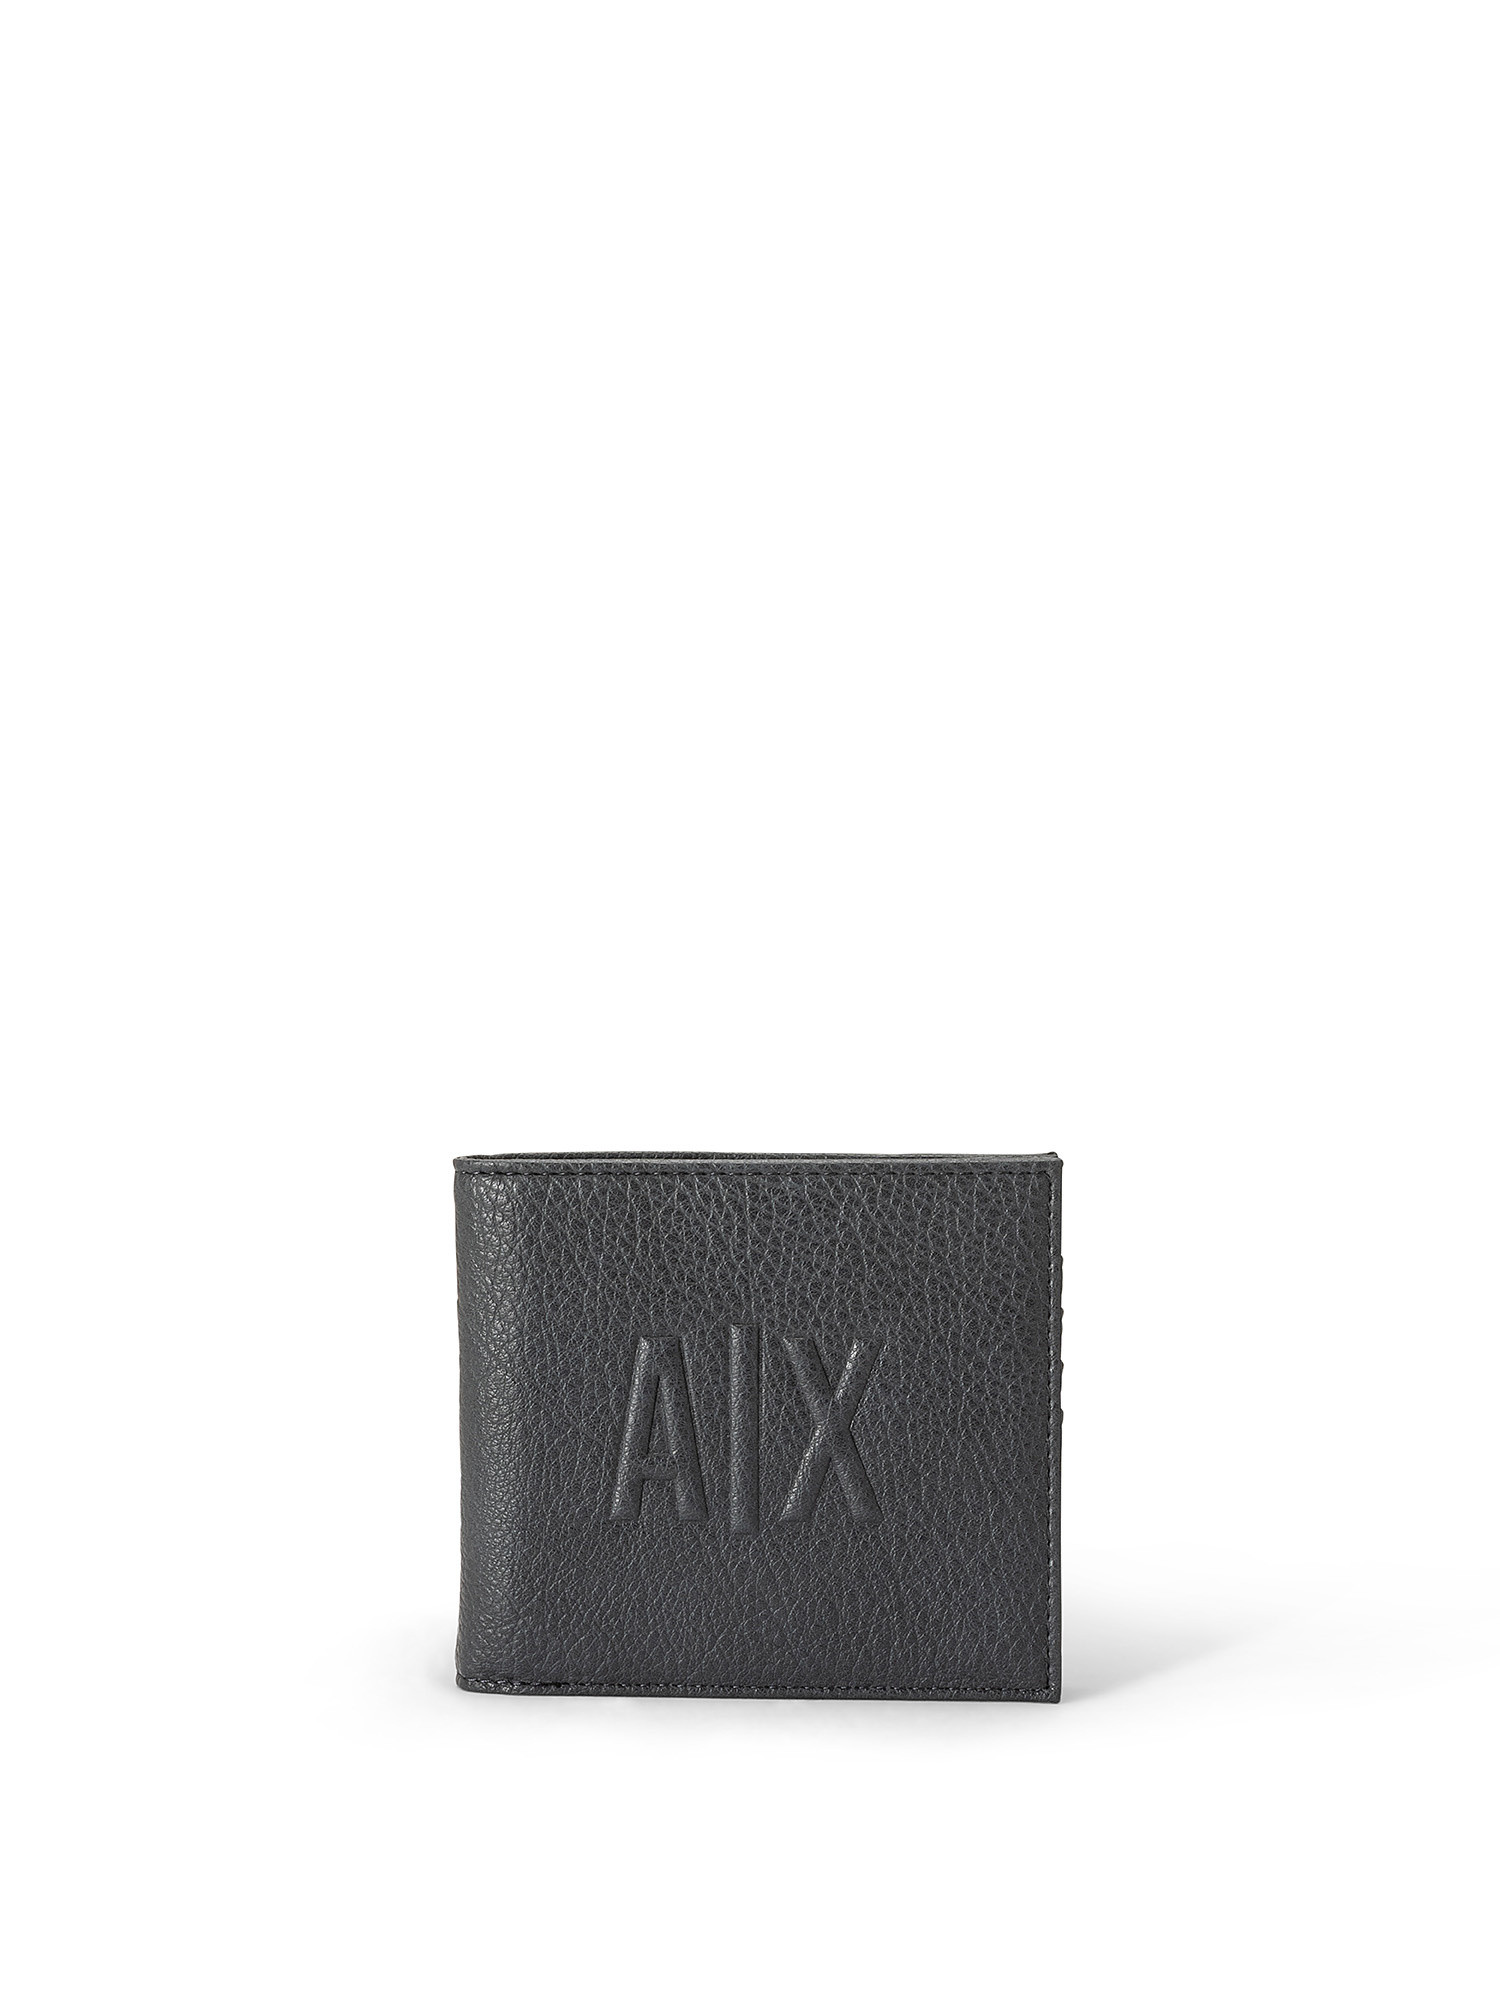 Armani Exchange - Wallet with logo, Dark Grey, large image number 0